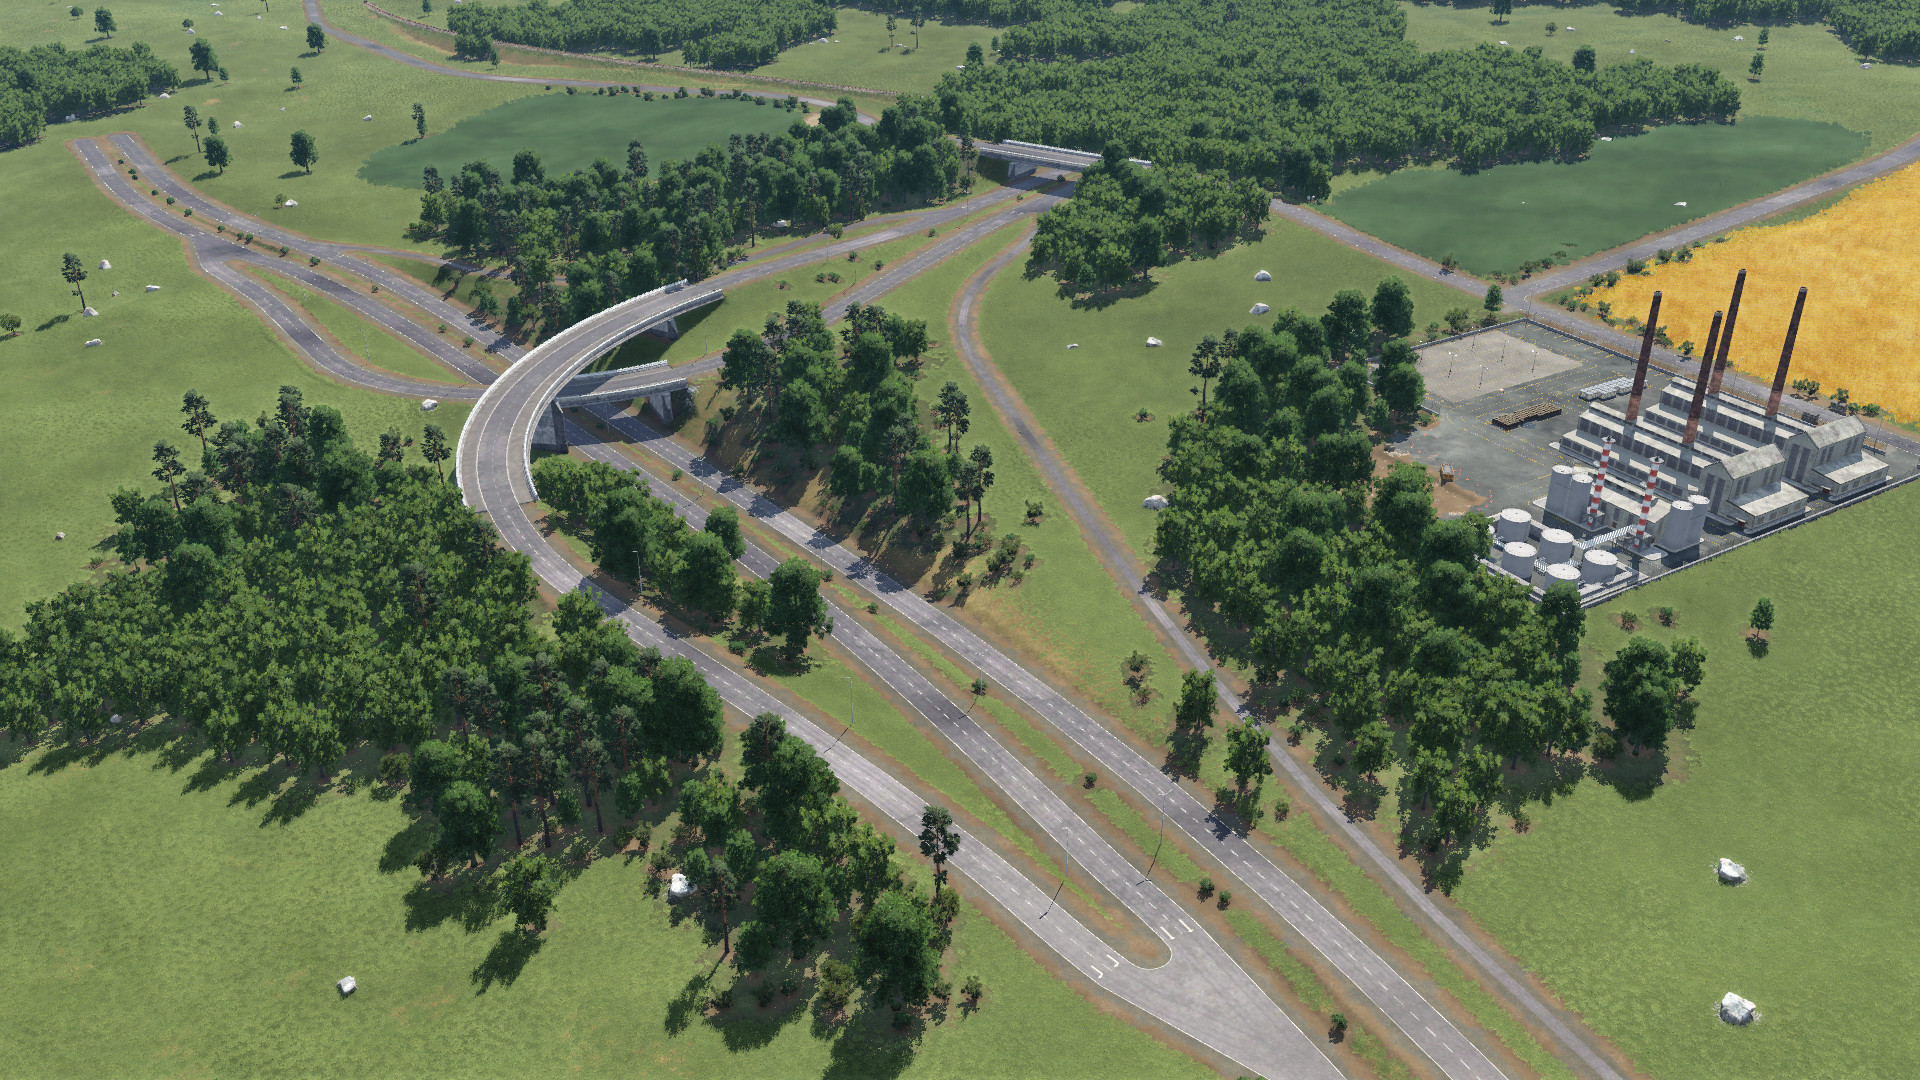 Autobahnkreuz